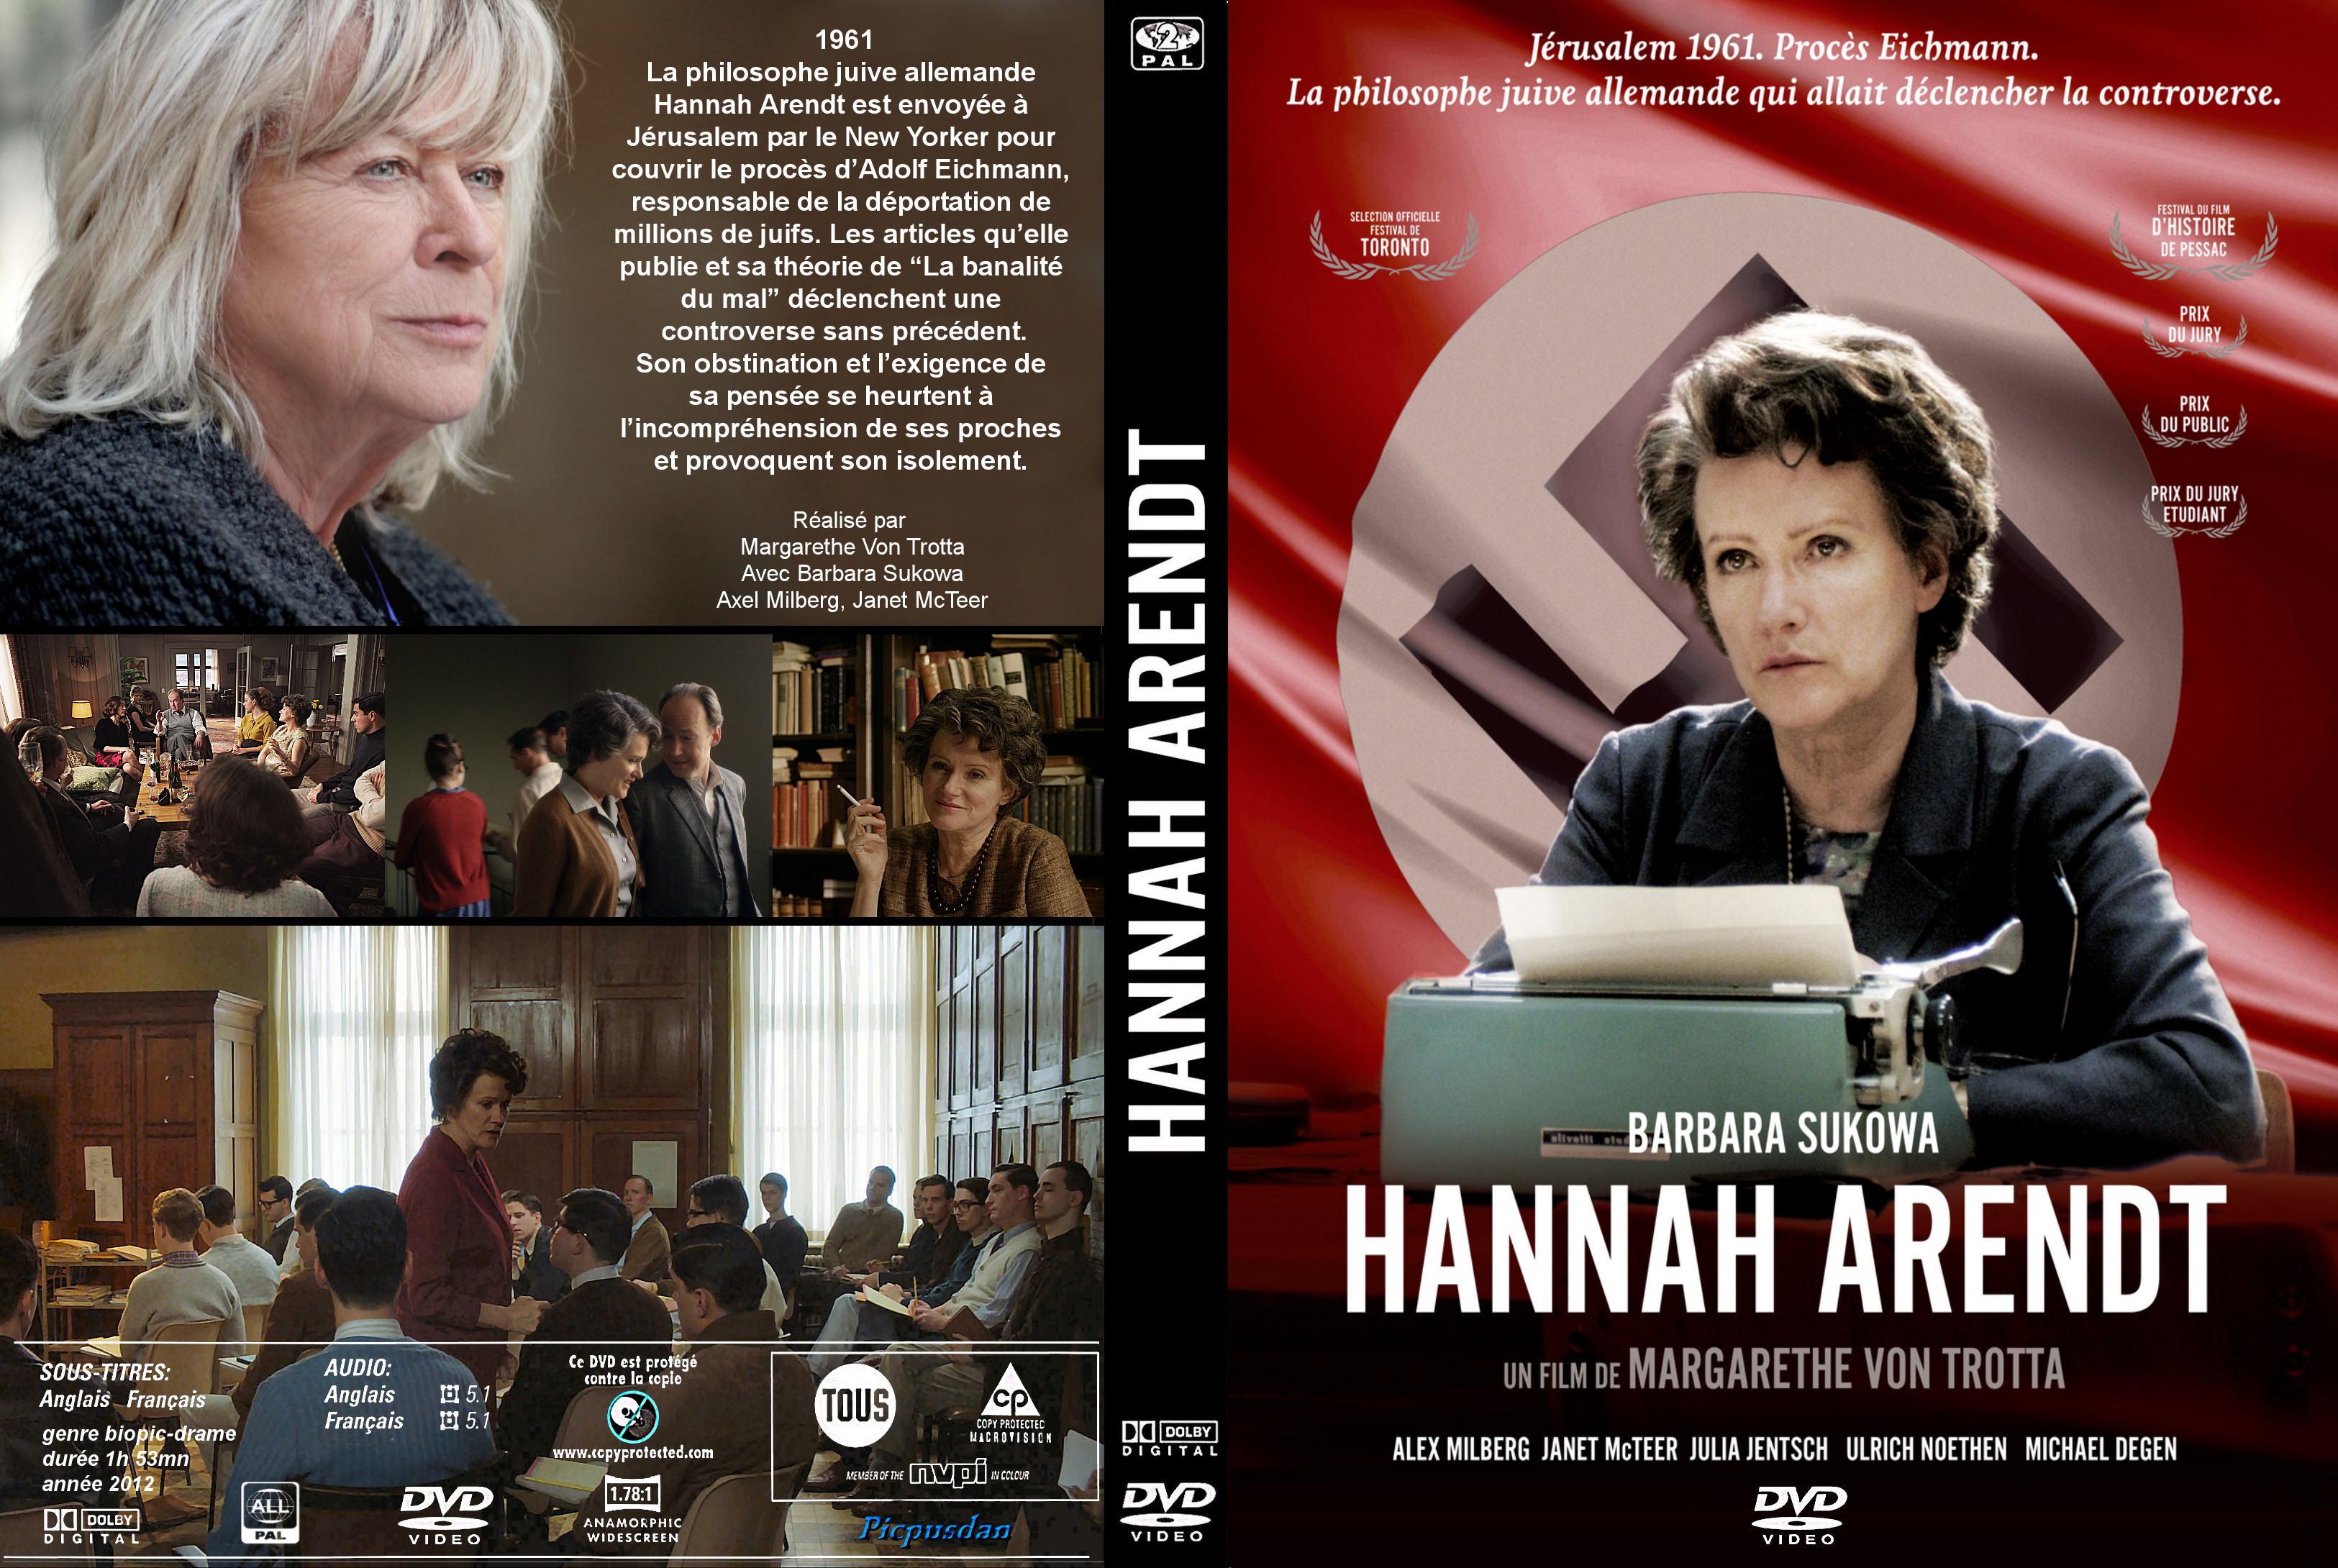 Jaquette DVD Hannah Arendt custom